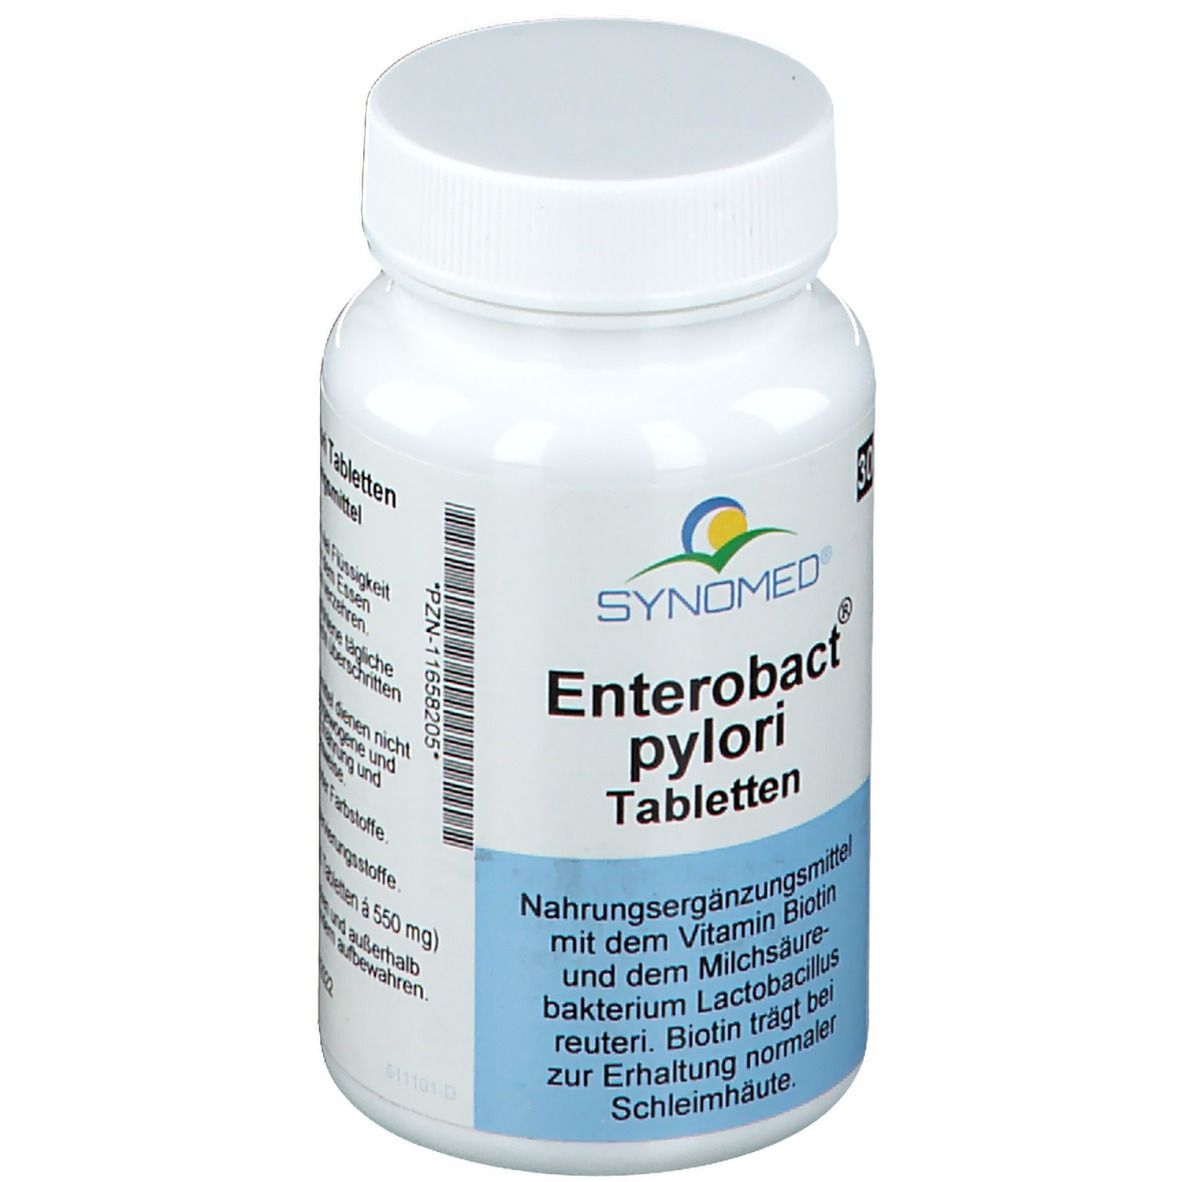 SYNOMED Enterobact® pylori